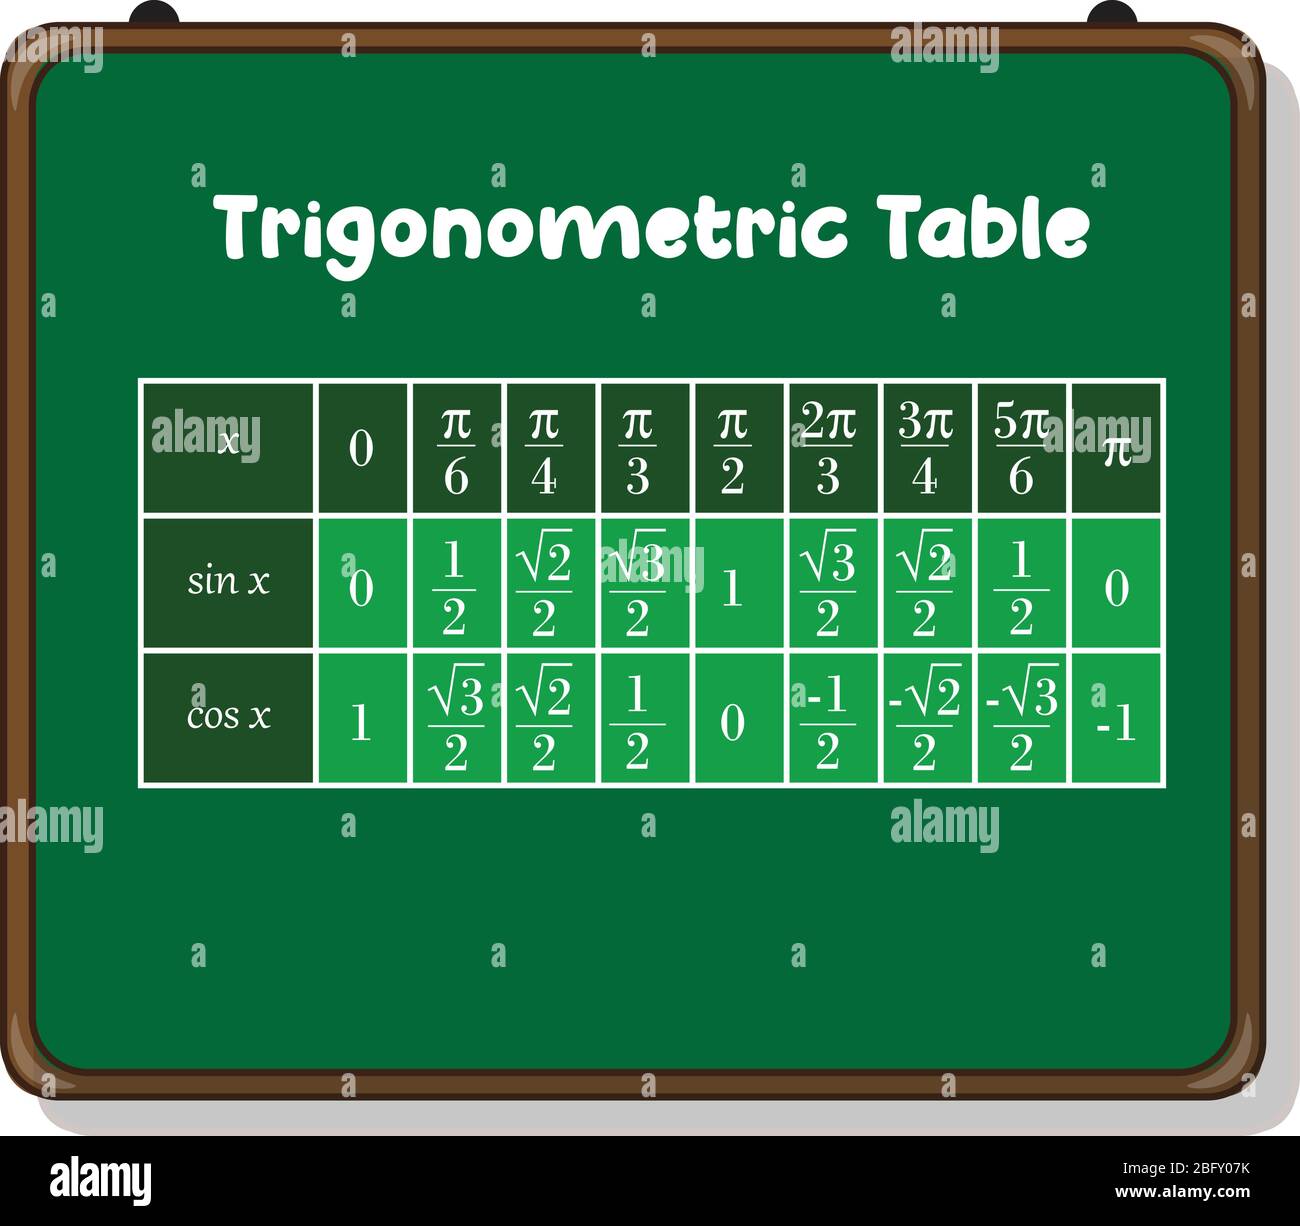 514 Trigonometry Table Images Stock Photos  Vectors  Shutterstock